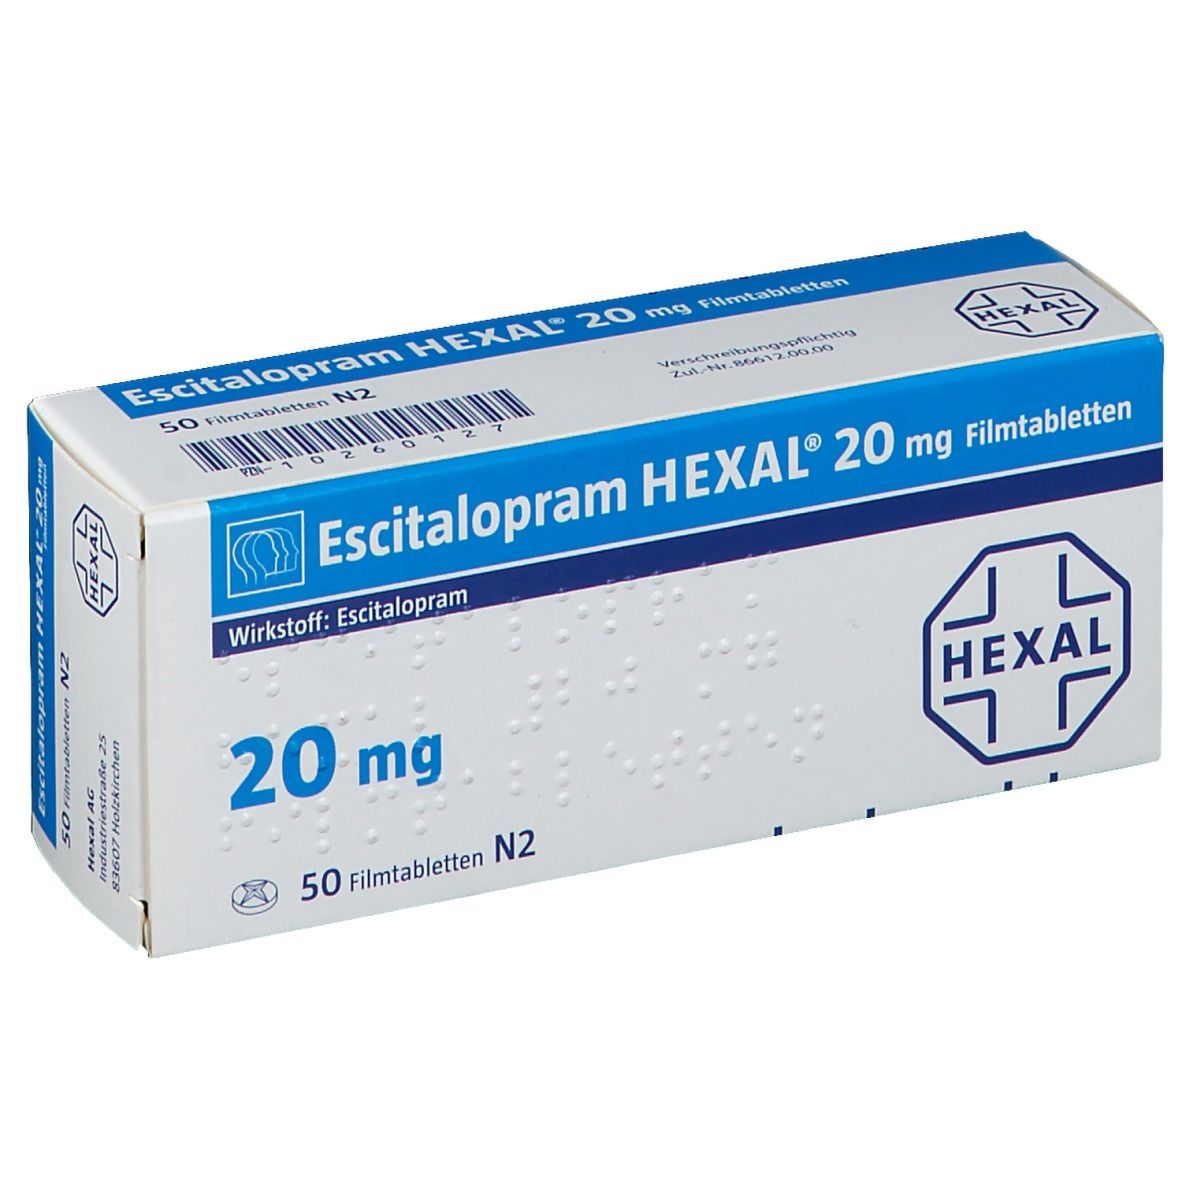 Escitalopram HEXAL® 20 mg Filmtabletten